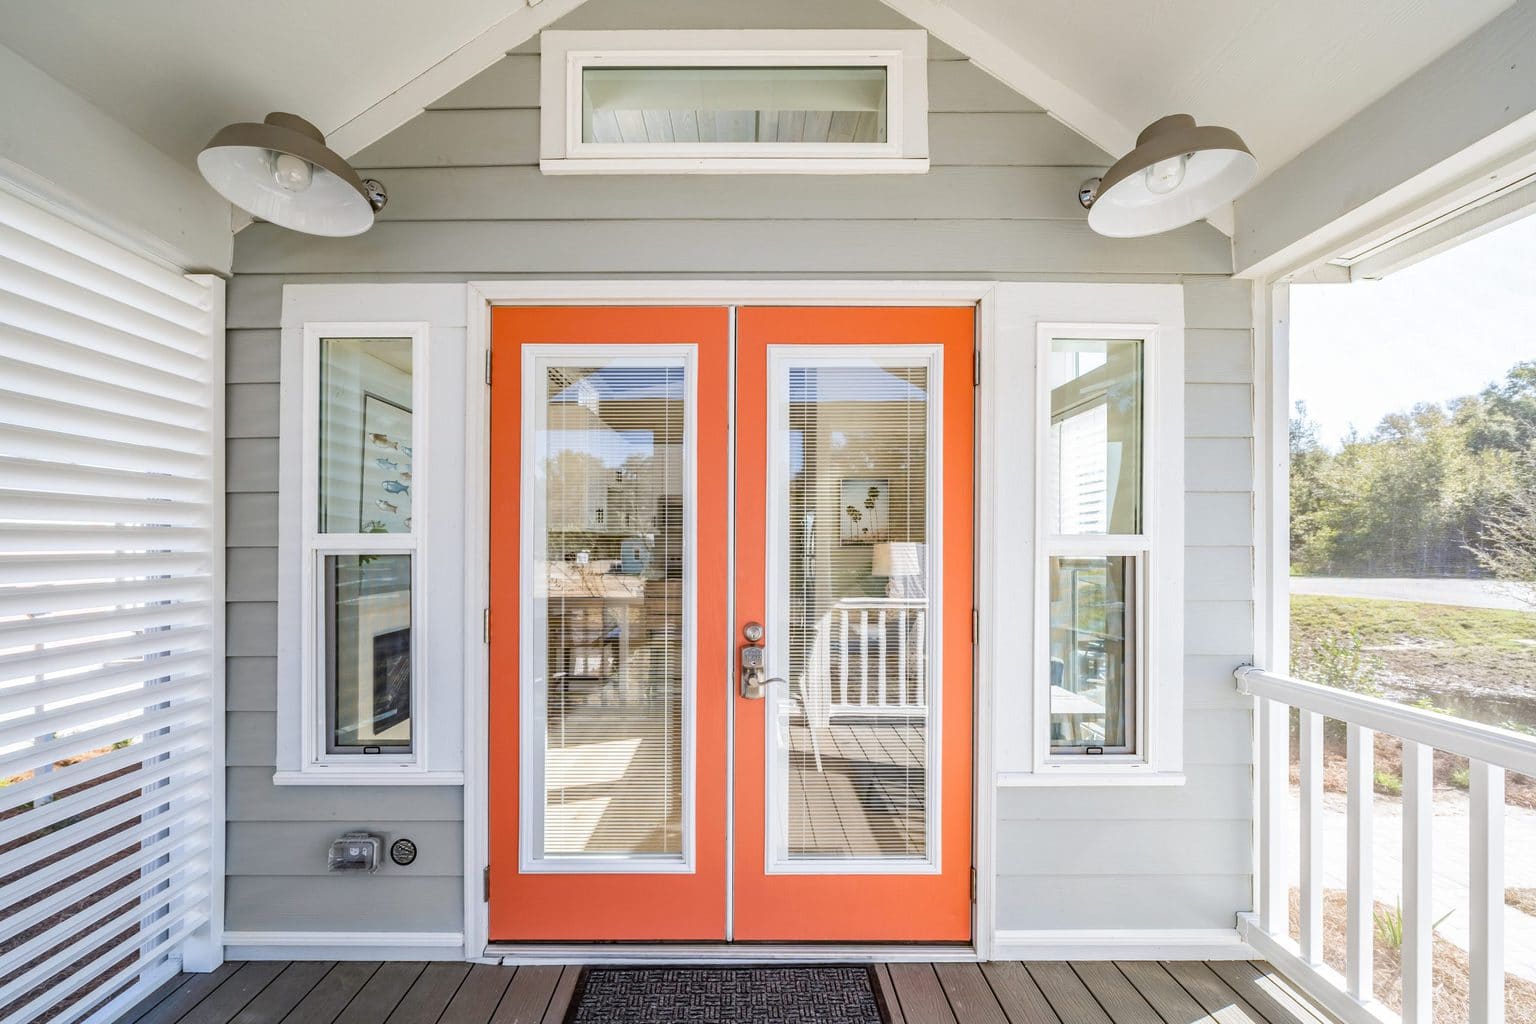 Top 10 Inspiring Cottage Porch Ideas